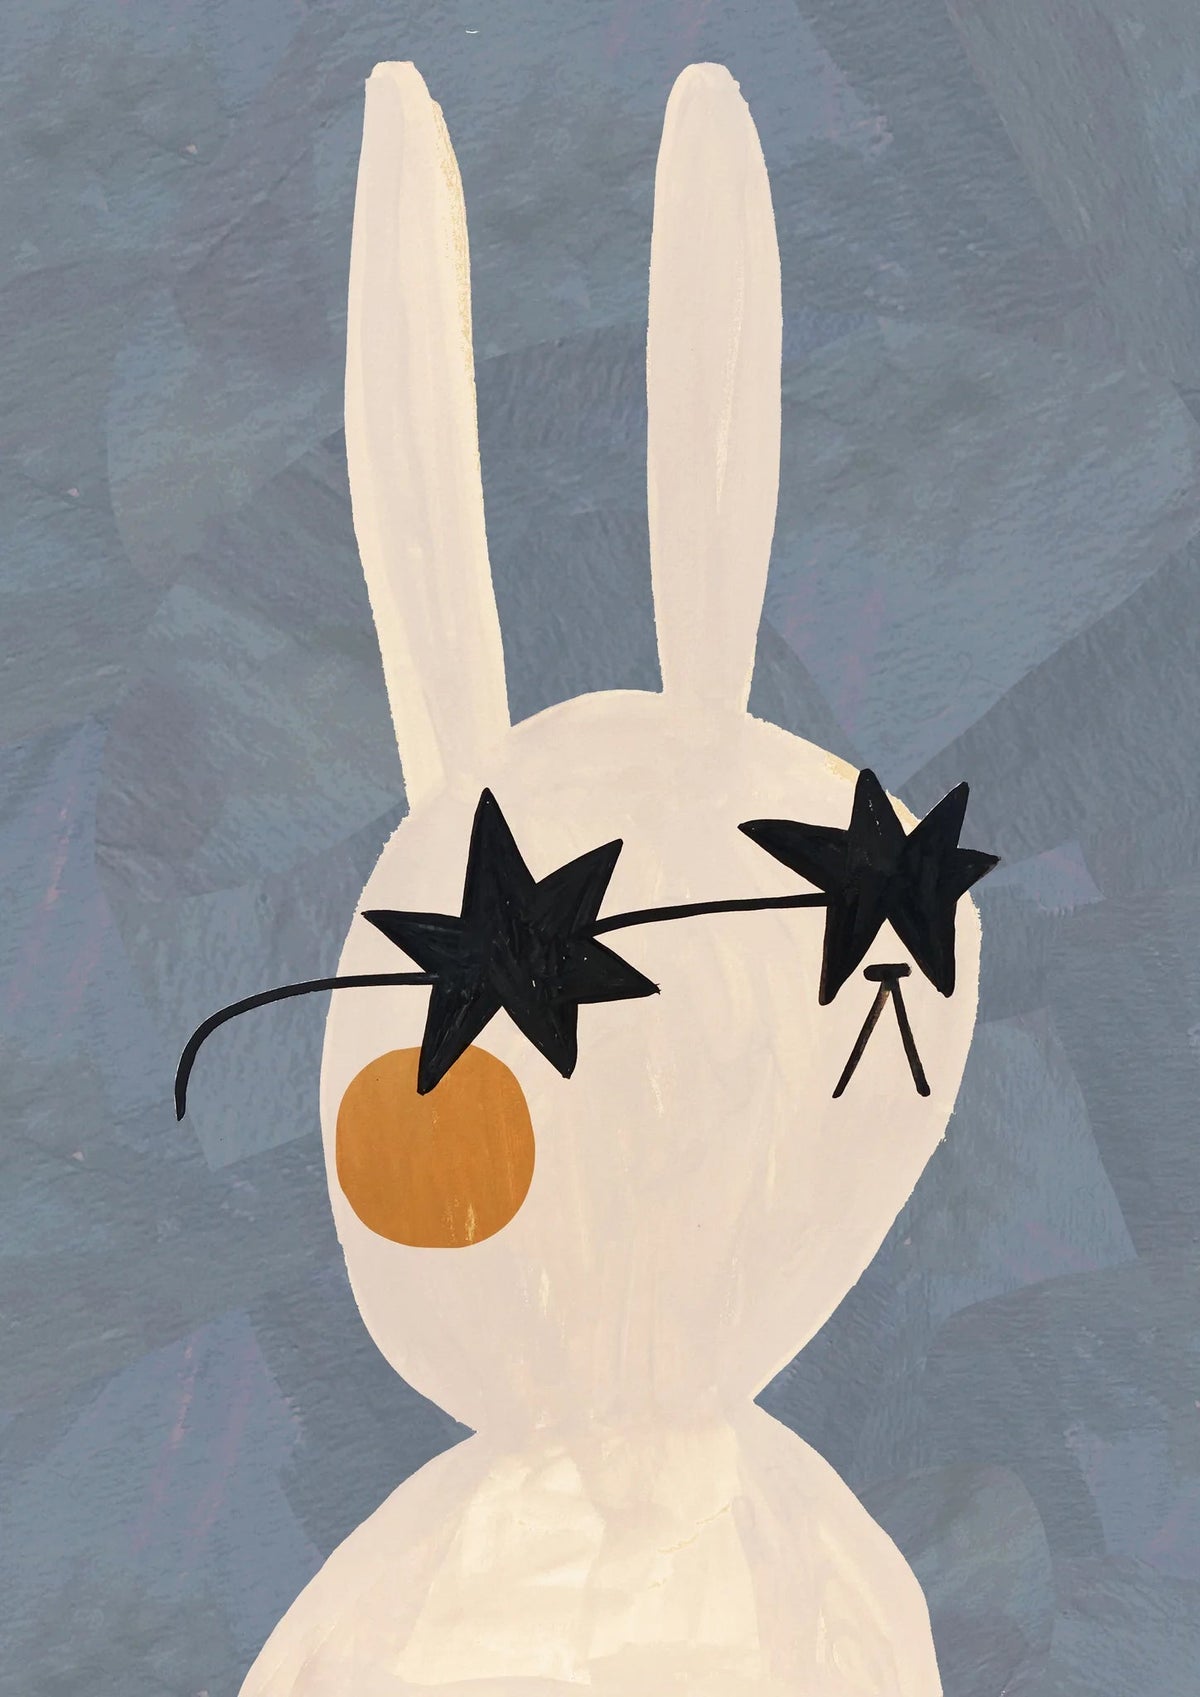 Art Print | Mr. Rabbit by Yaya Studio - Maude Kids Decor